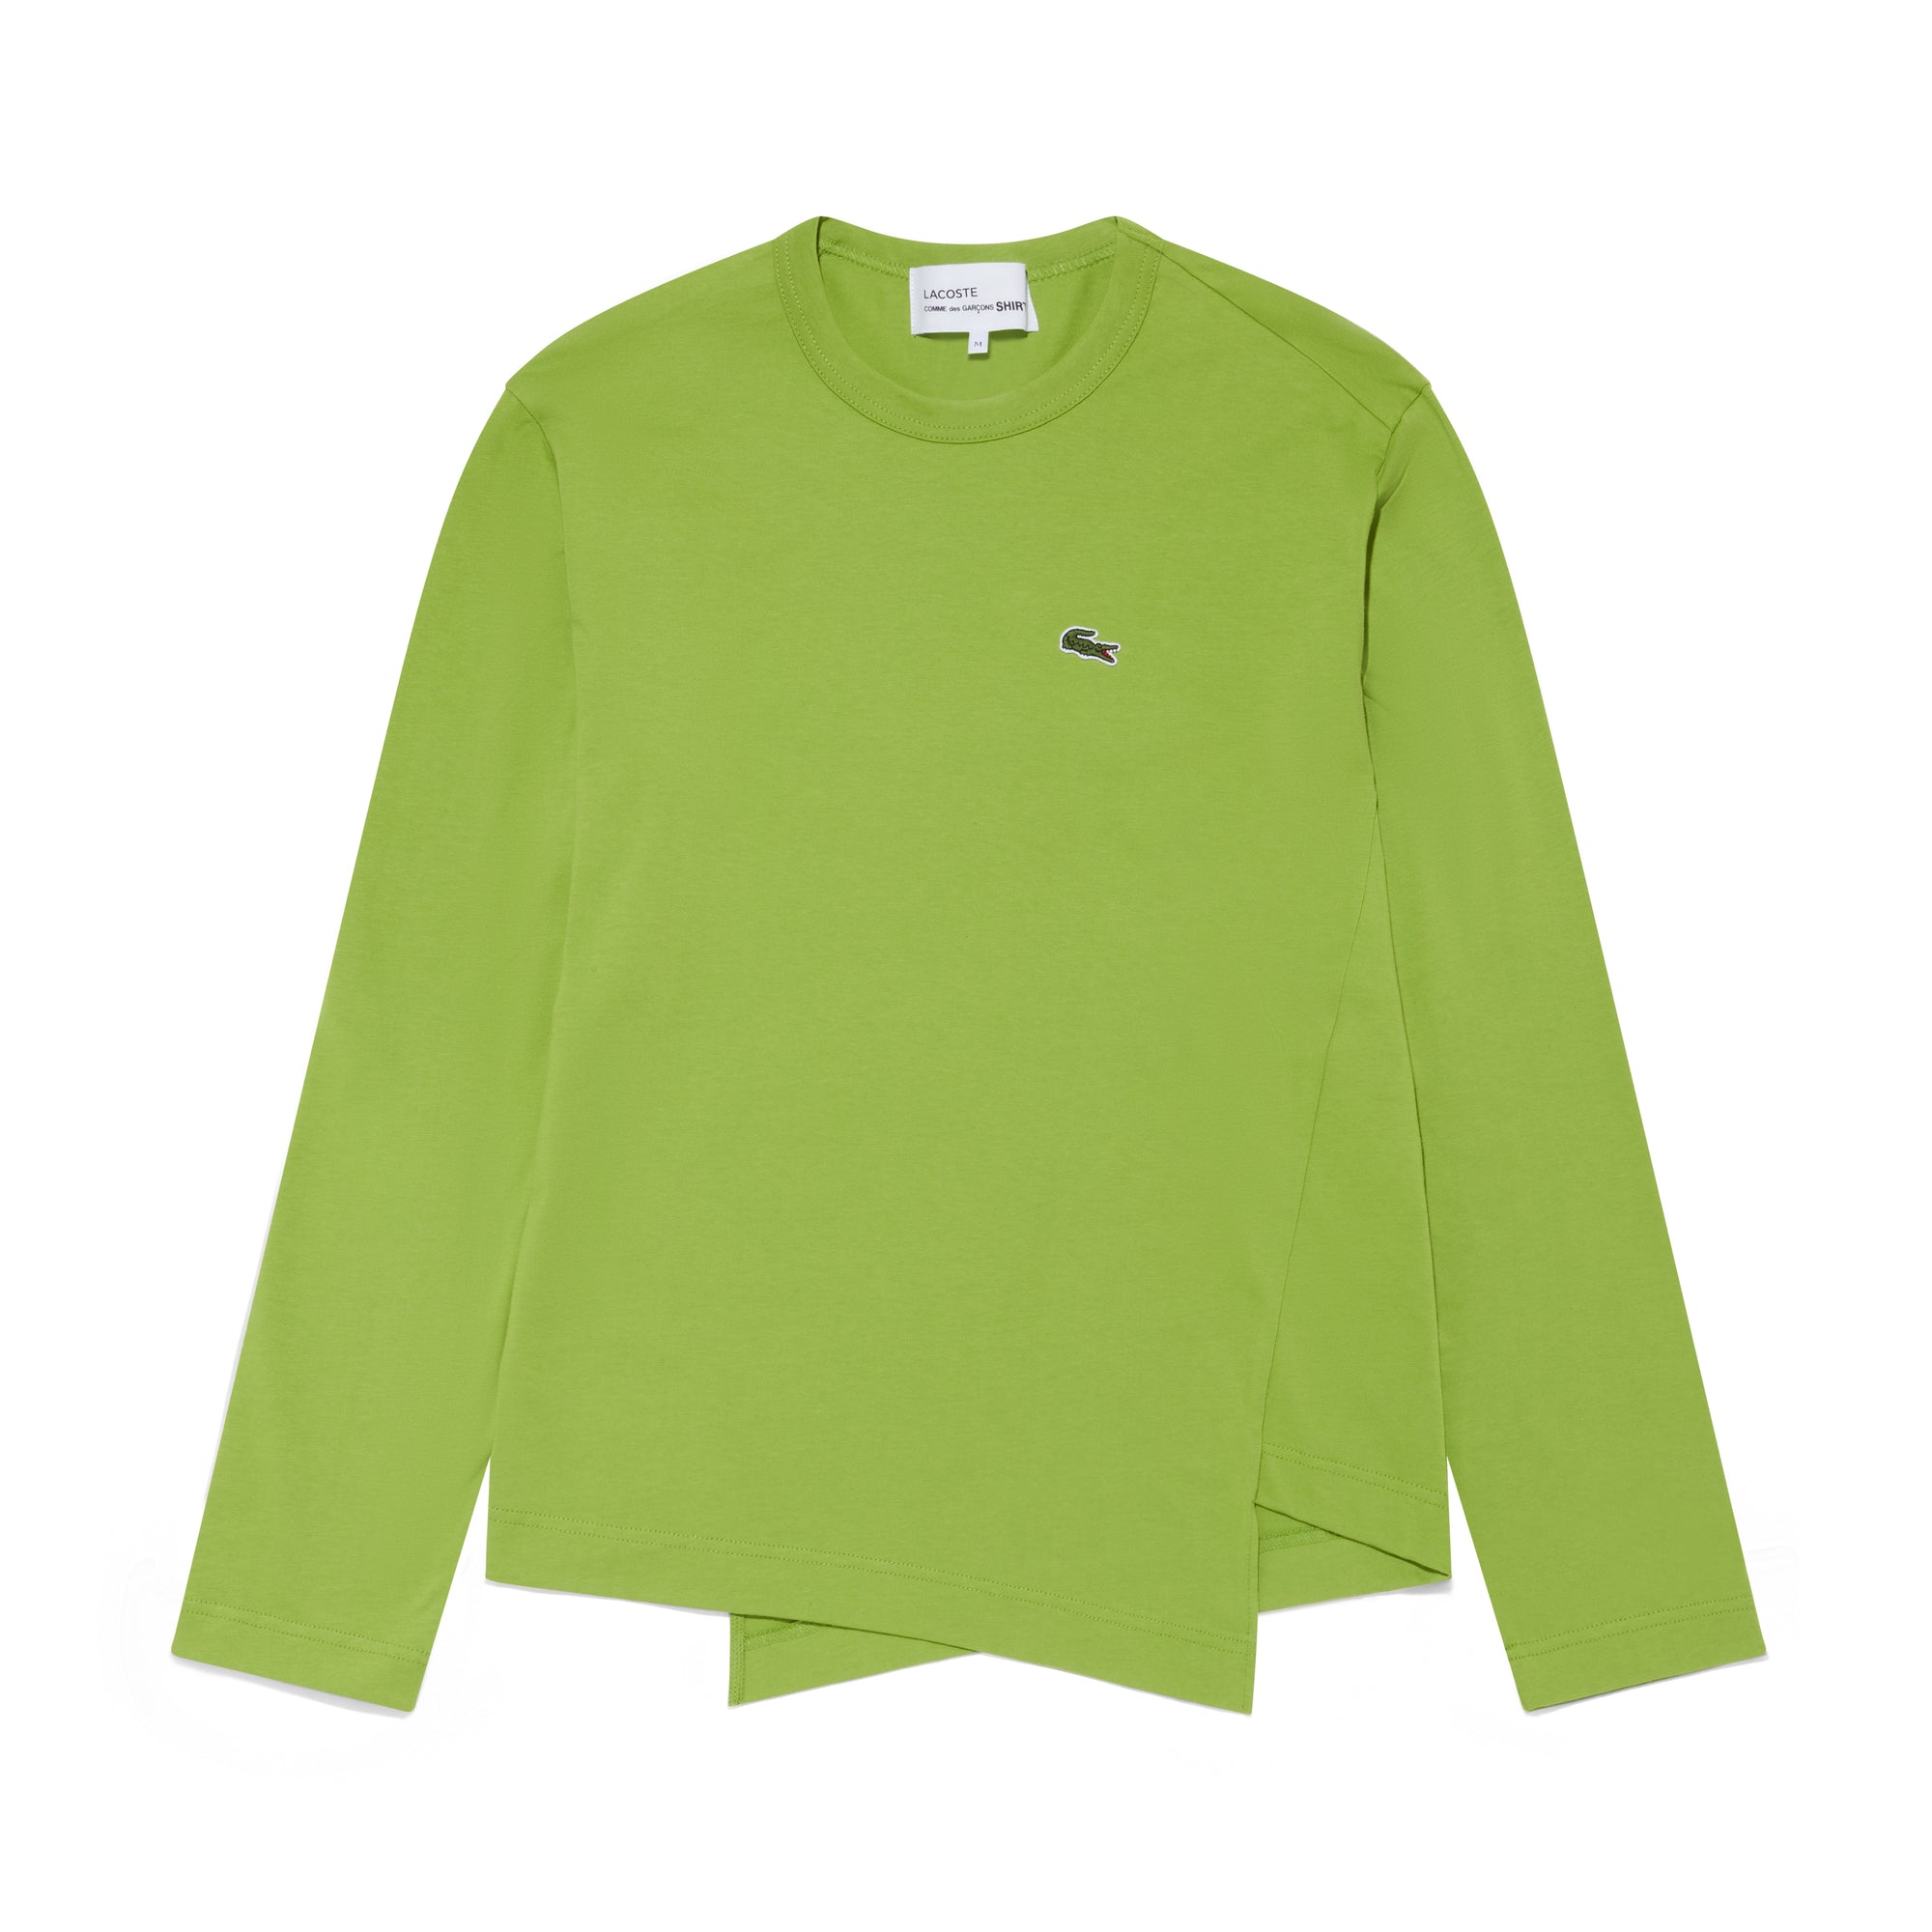 CDG Shirt - Lacoste Men’s Long Sleeve T-Shirt - (Green) view 5